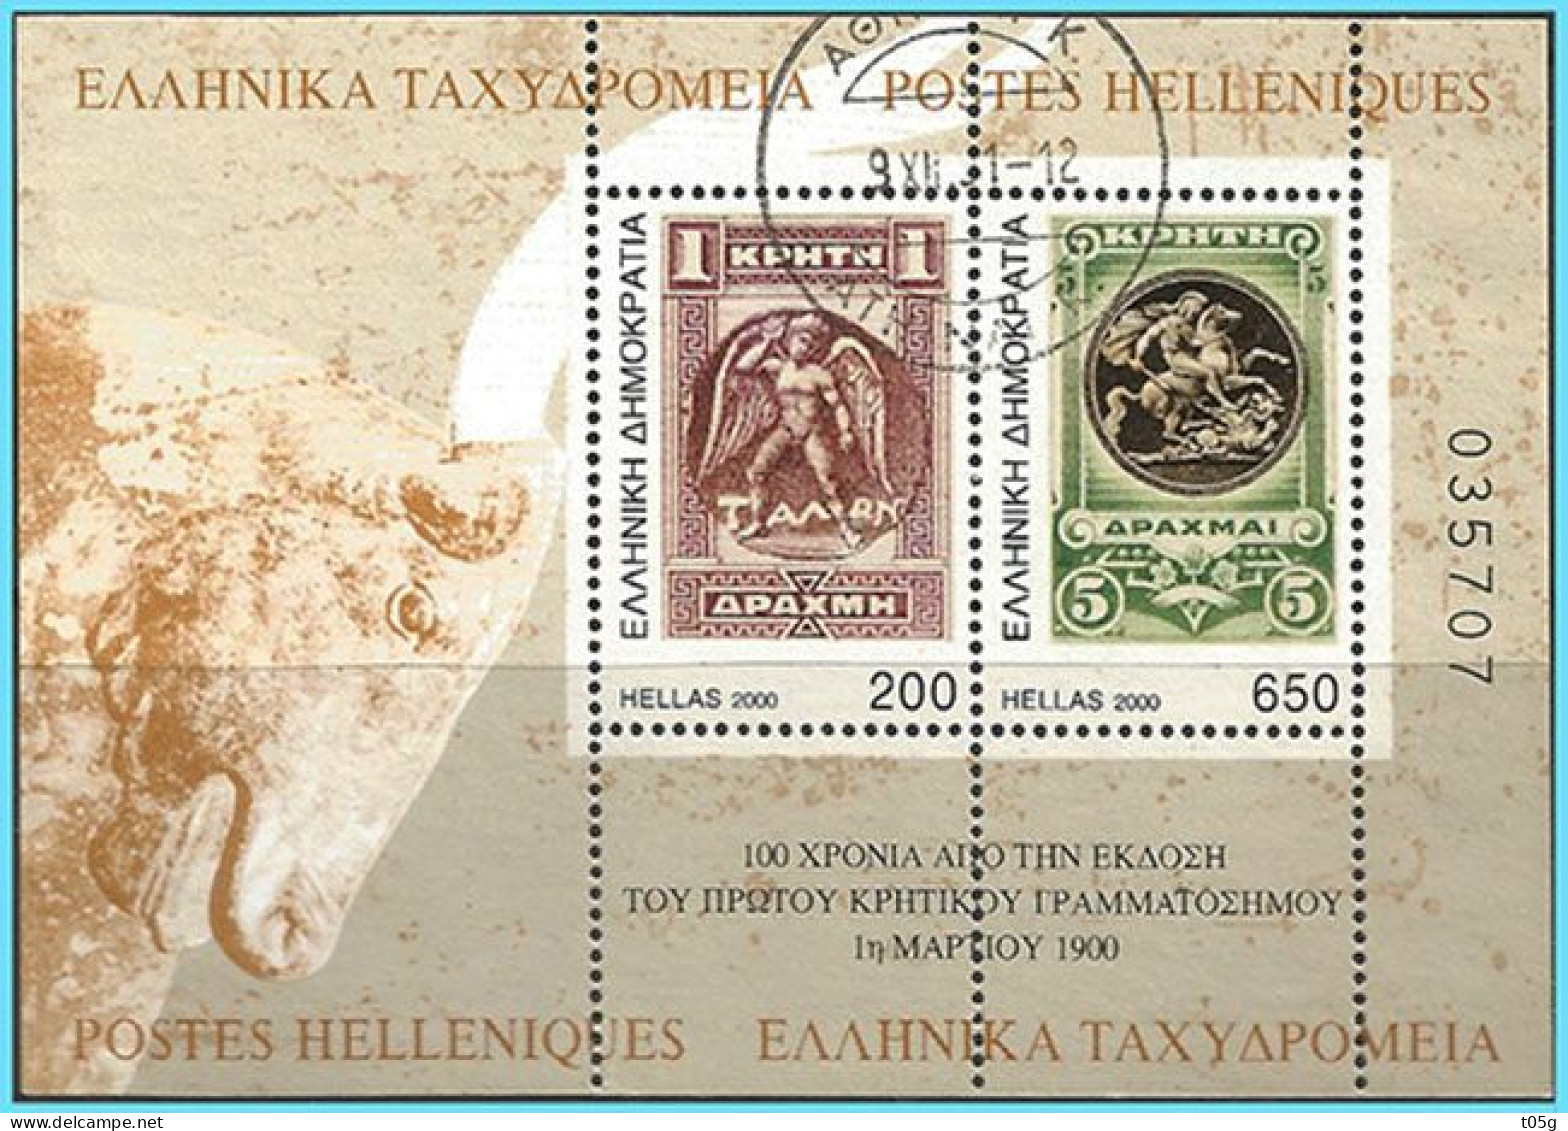 GREECE- GRECE- HELLAS 2000:  The Stamps Of Crete Miniature Sheet Used - Gebruikt